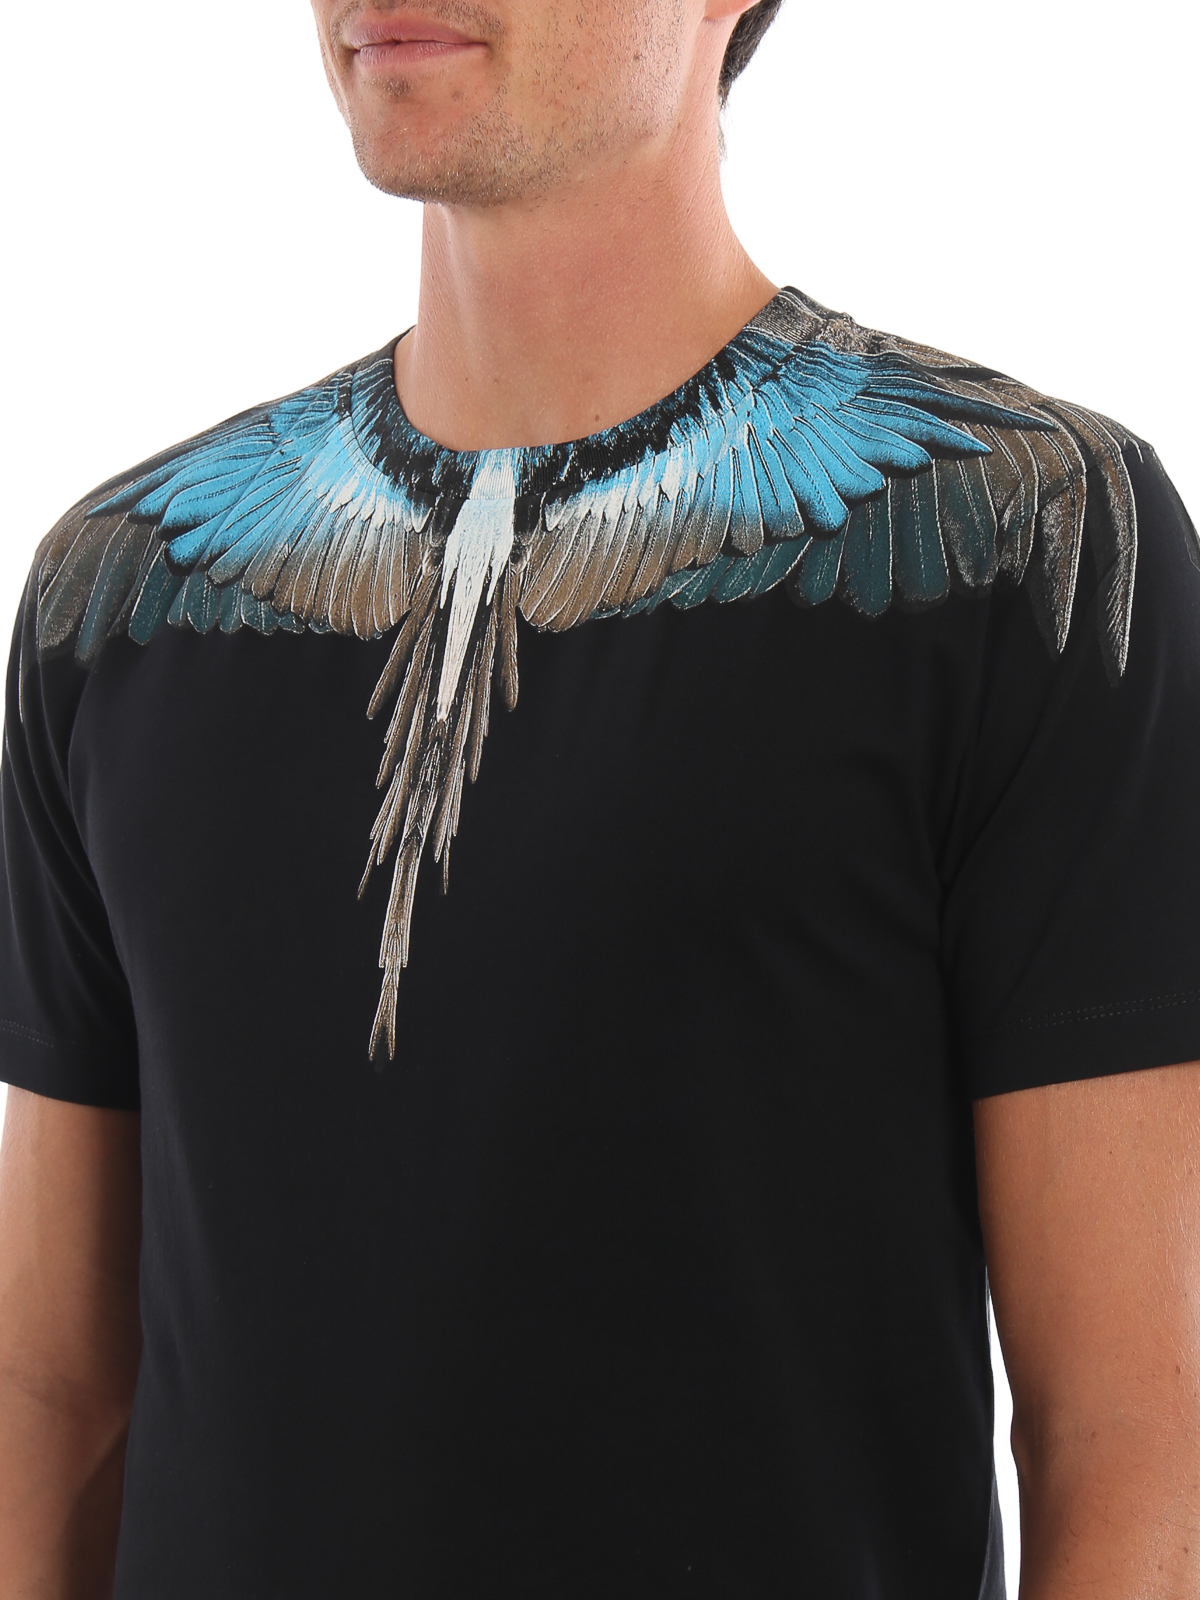 Marcelo Burlon Turquoise Wings T-shirt -